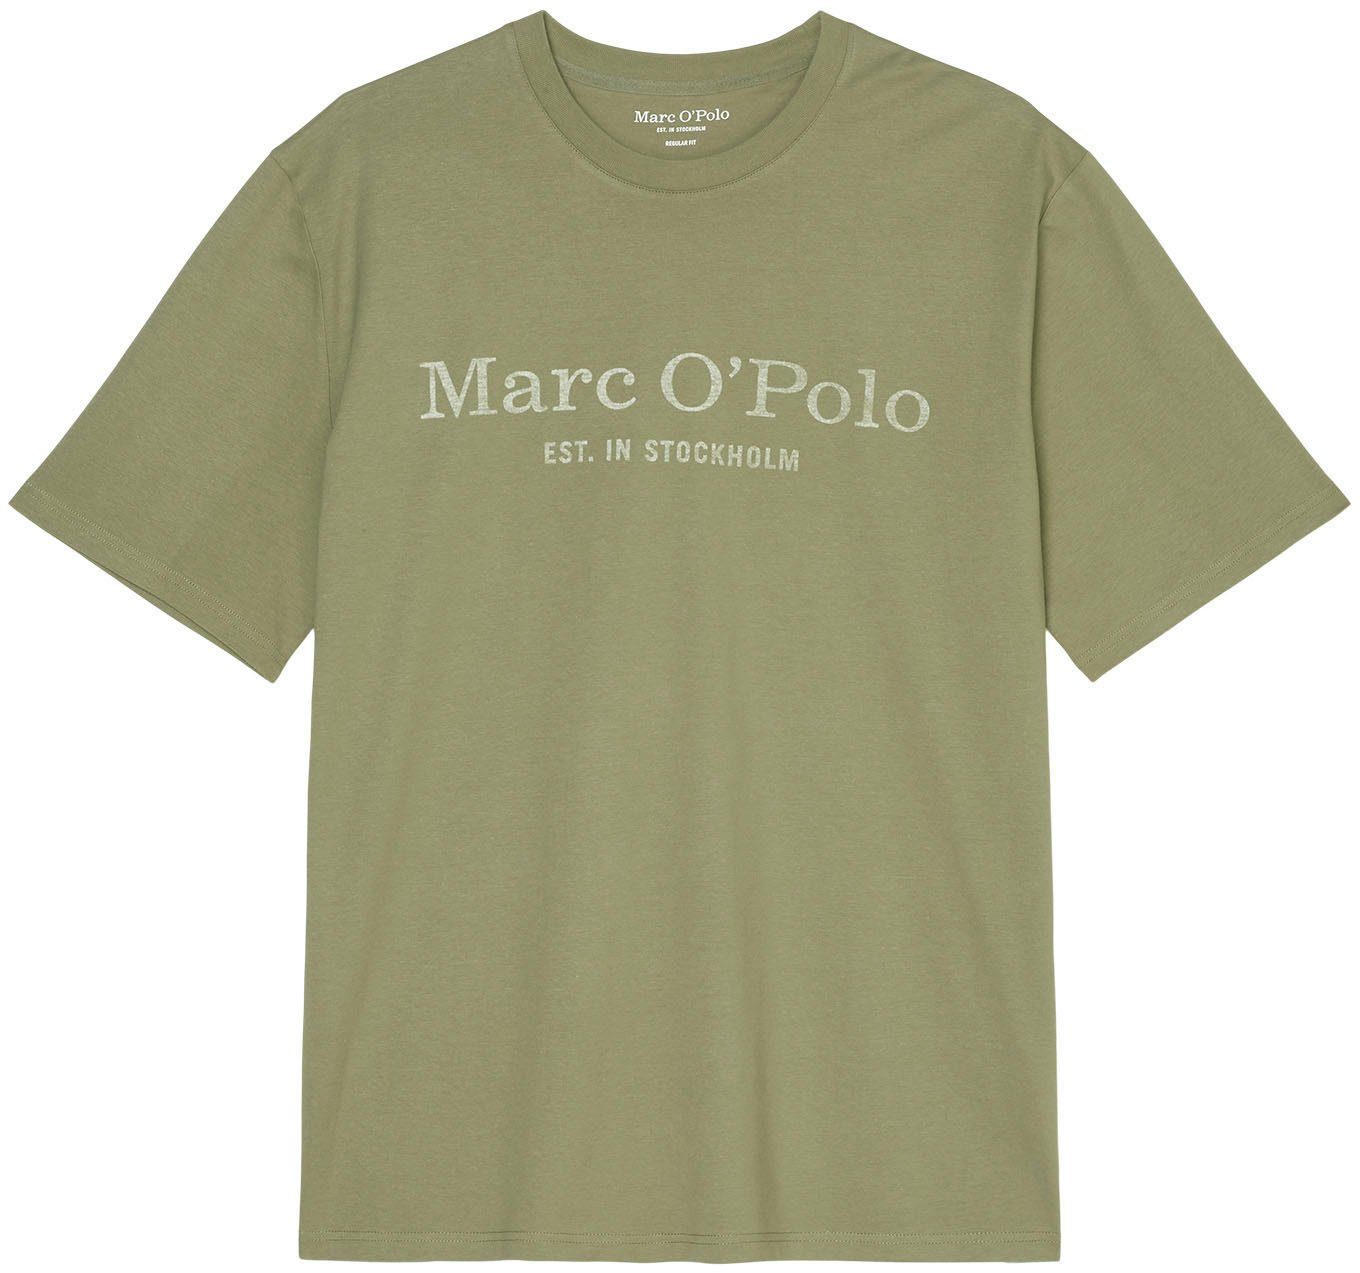 Marc O'Polo T-Shirt in Big&Tall-Größen olive